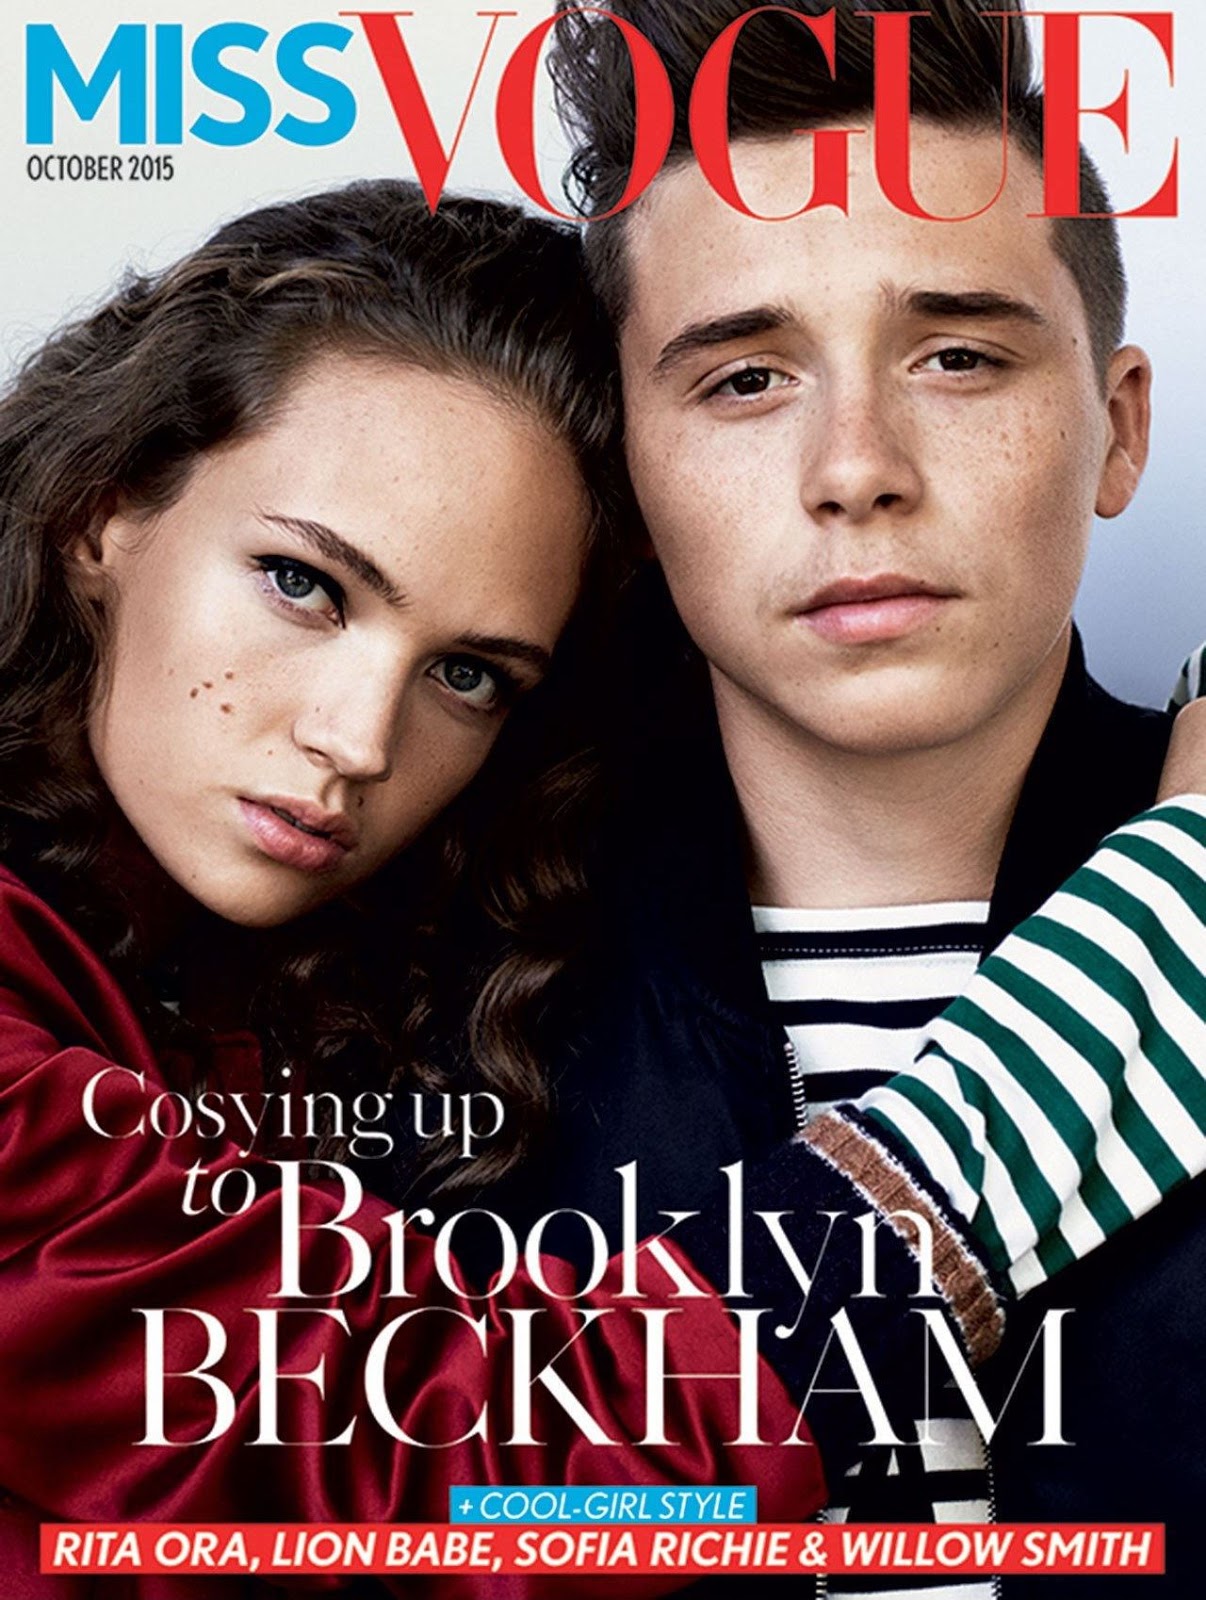 Brooklyn Beckham Miss Vogue October 2015 Cover Photo Shoot 001